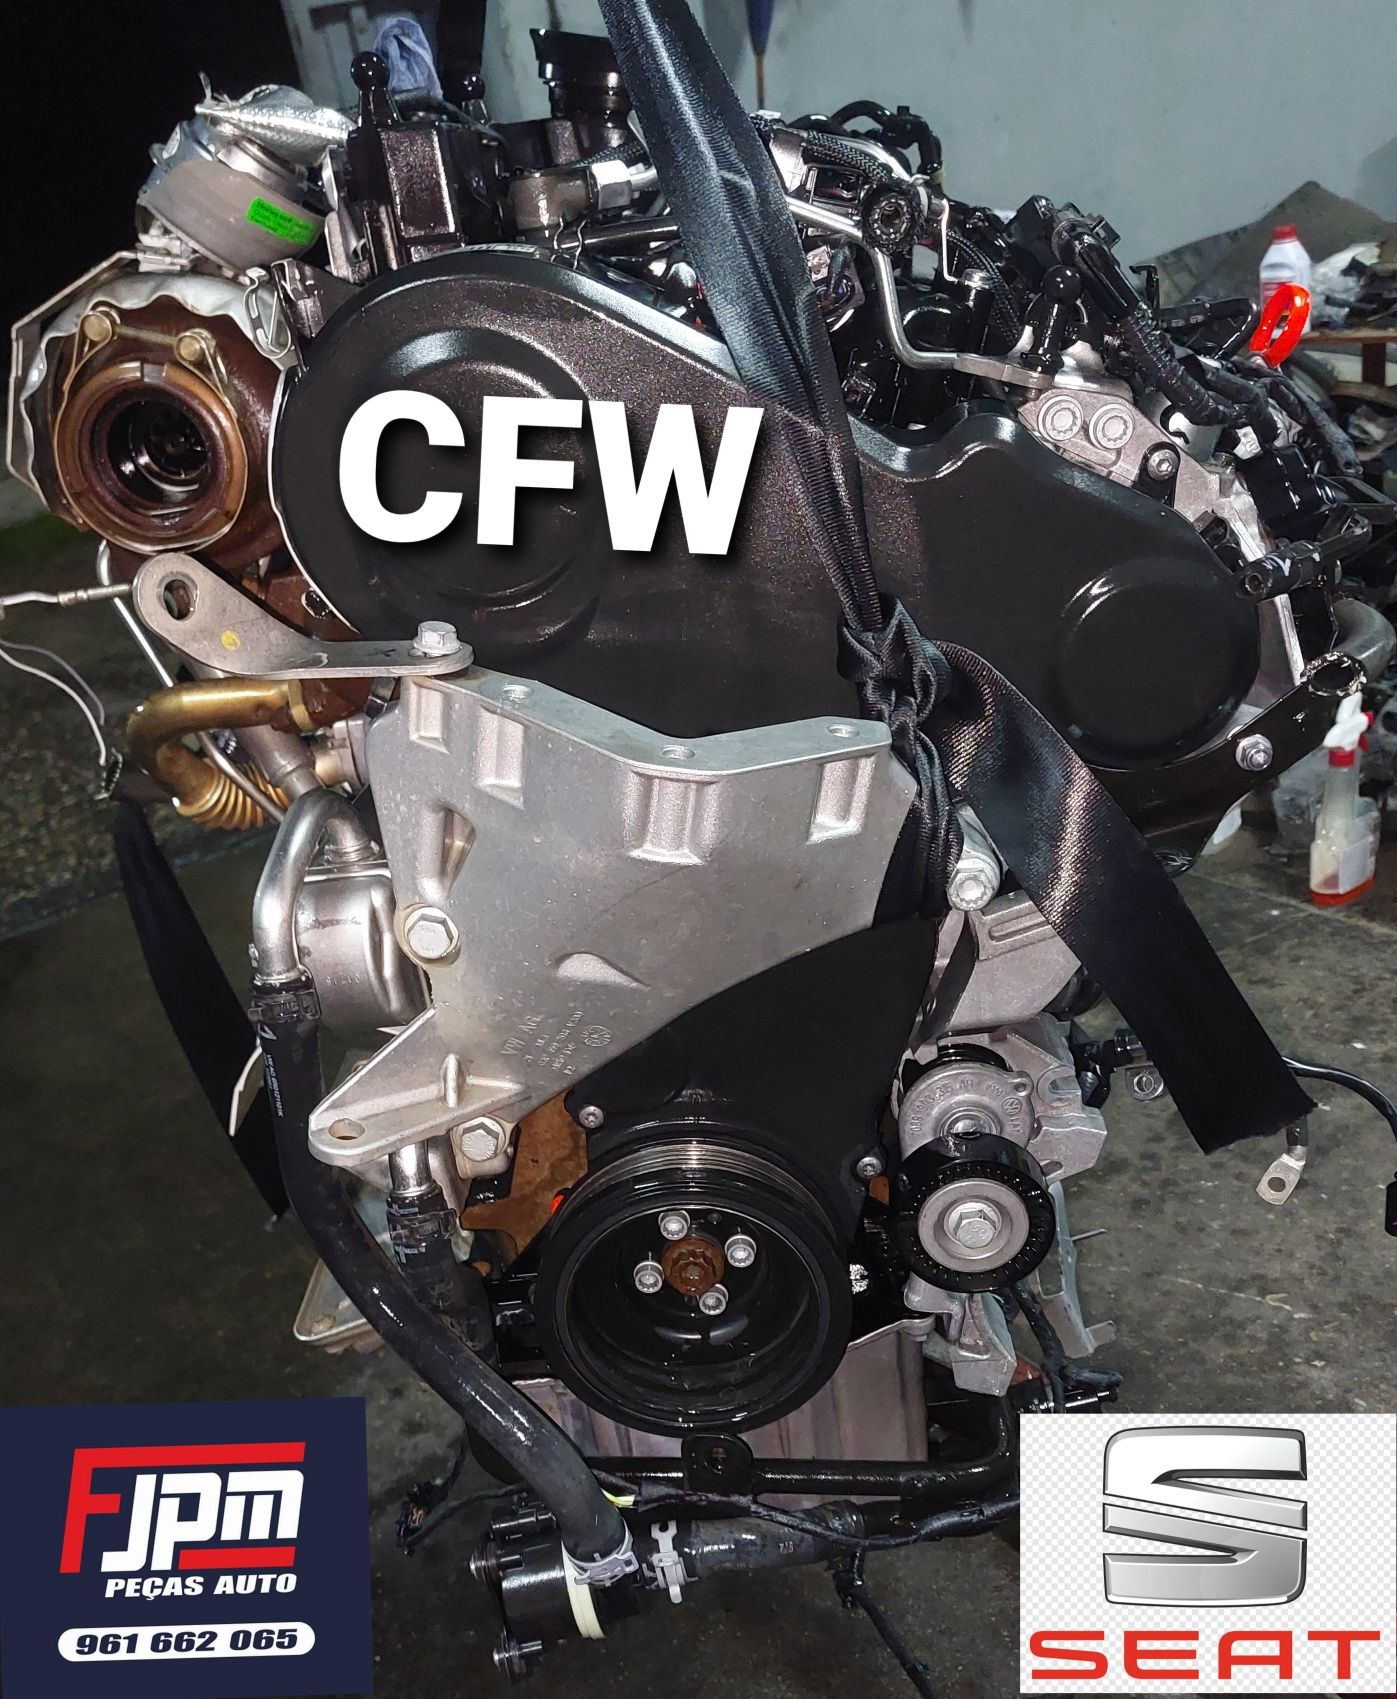 Motor vw 1.2 tdi 2013 ref cfw